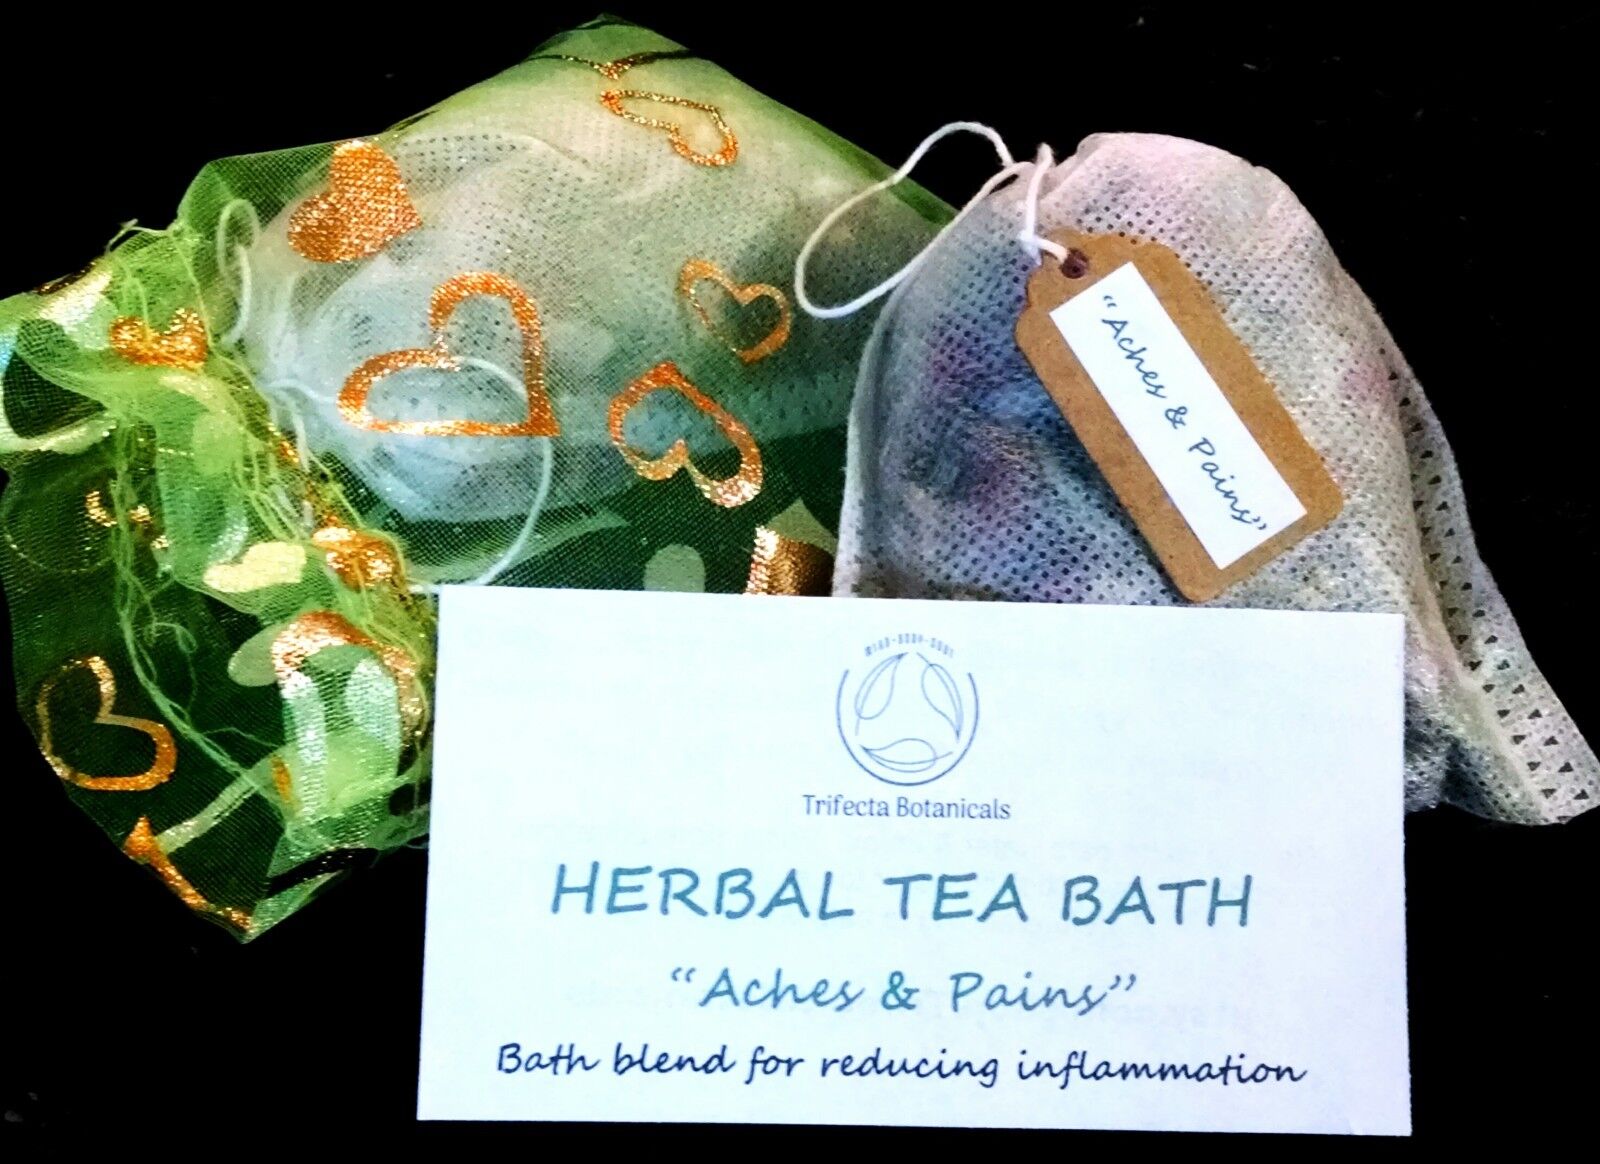 Aches & Pains Organic Herbal Bath Tea Natural Apothecary Tub Spa Soak  Trifecta Botanicals